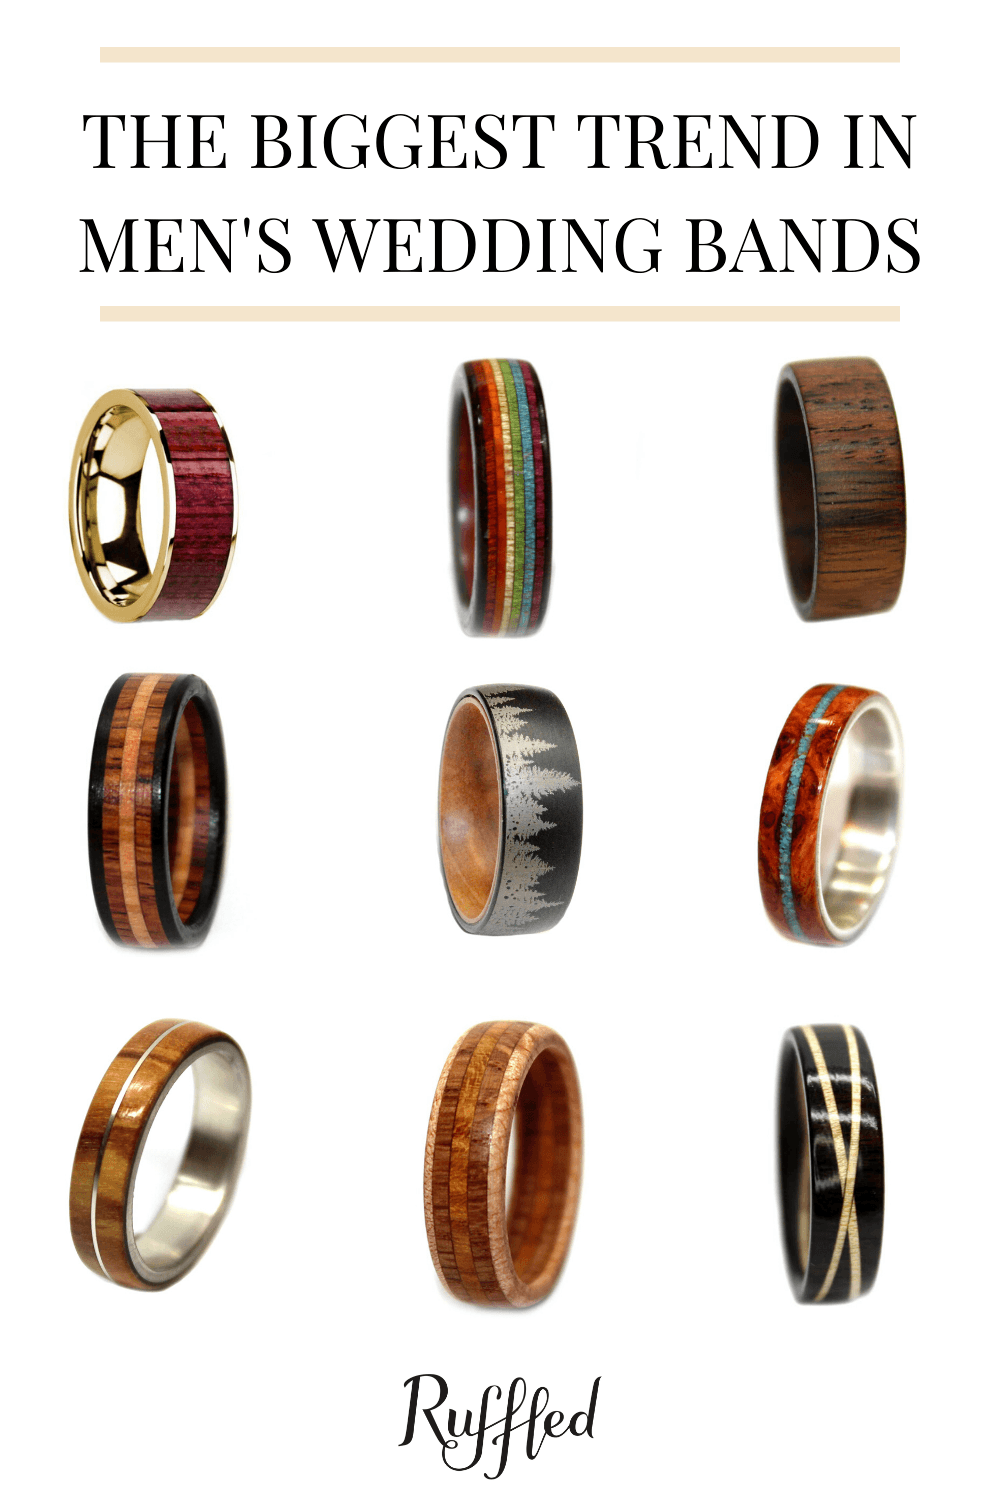 Rosewood, Olivewood & Mahogany Wood Ring - Wooden Rings